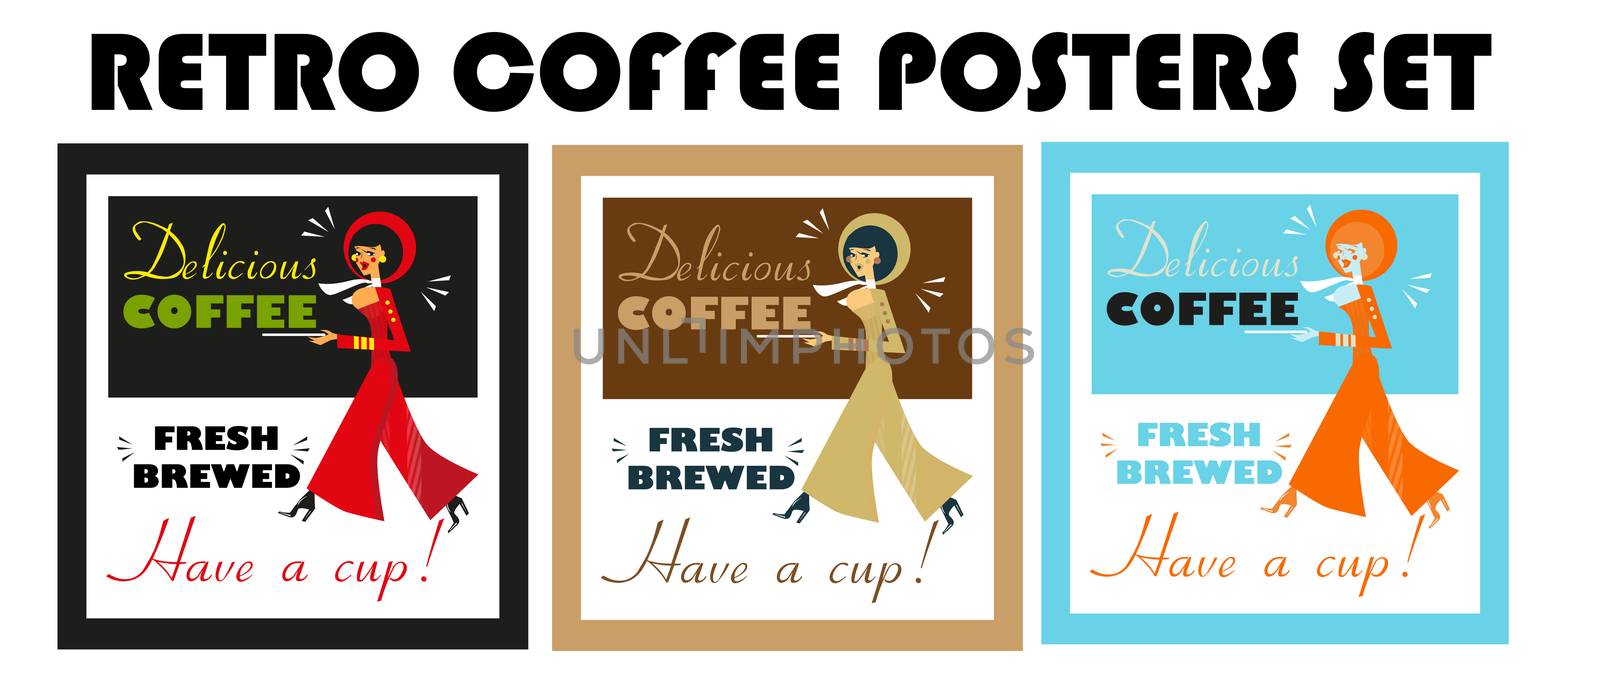 Vintage Food & Drink Poster Print Coffee Vintage sign - Fresh Br by tamaravector